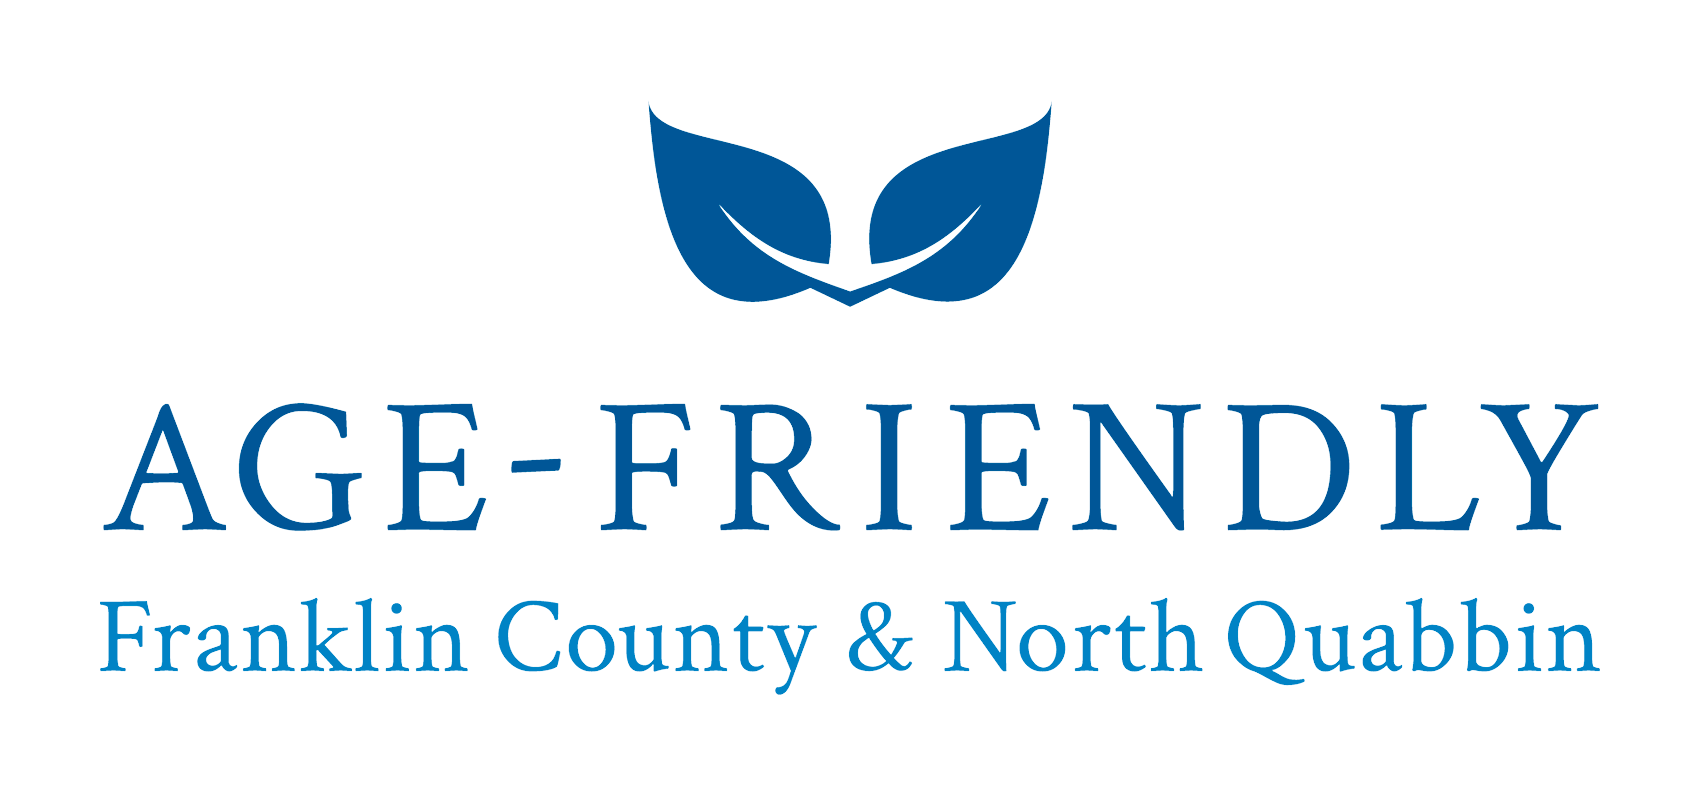 Age-Friendly Franklin County & North Quabbin